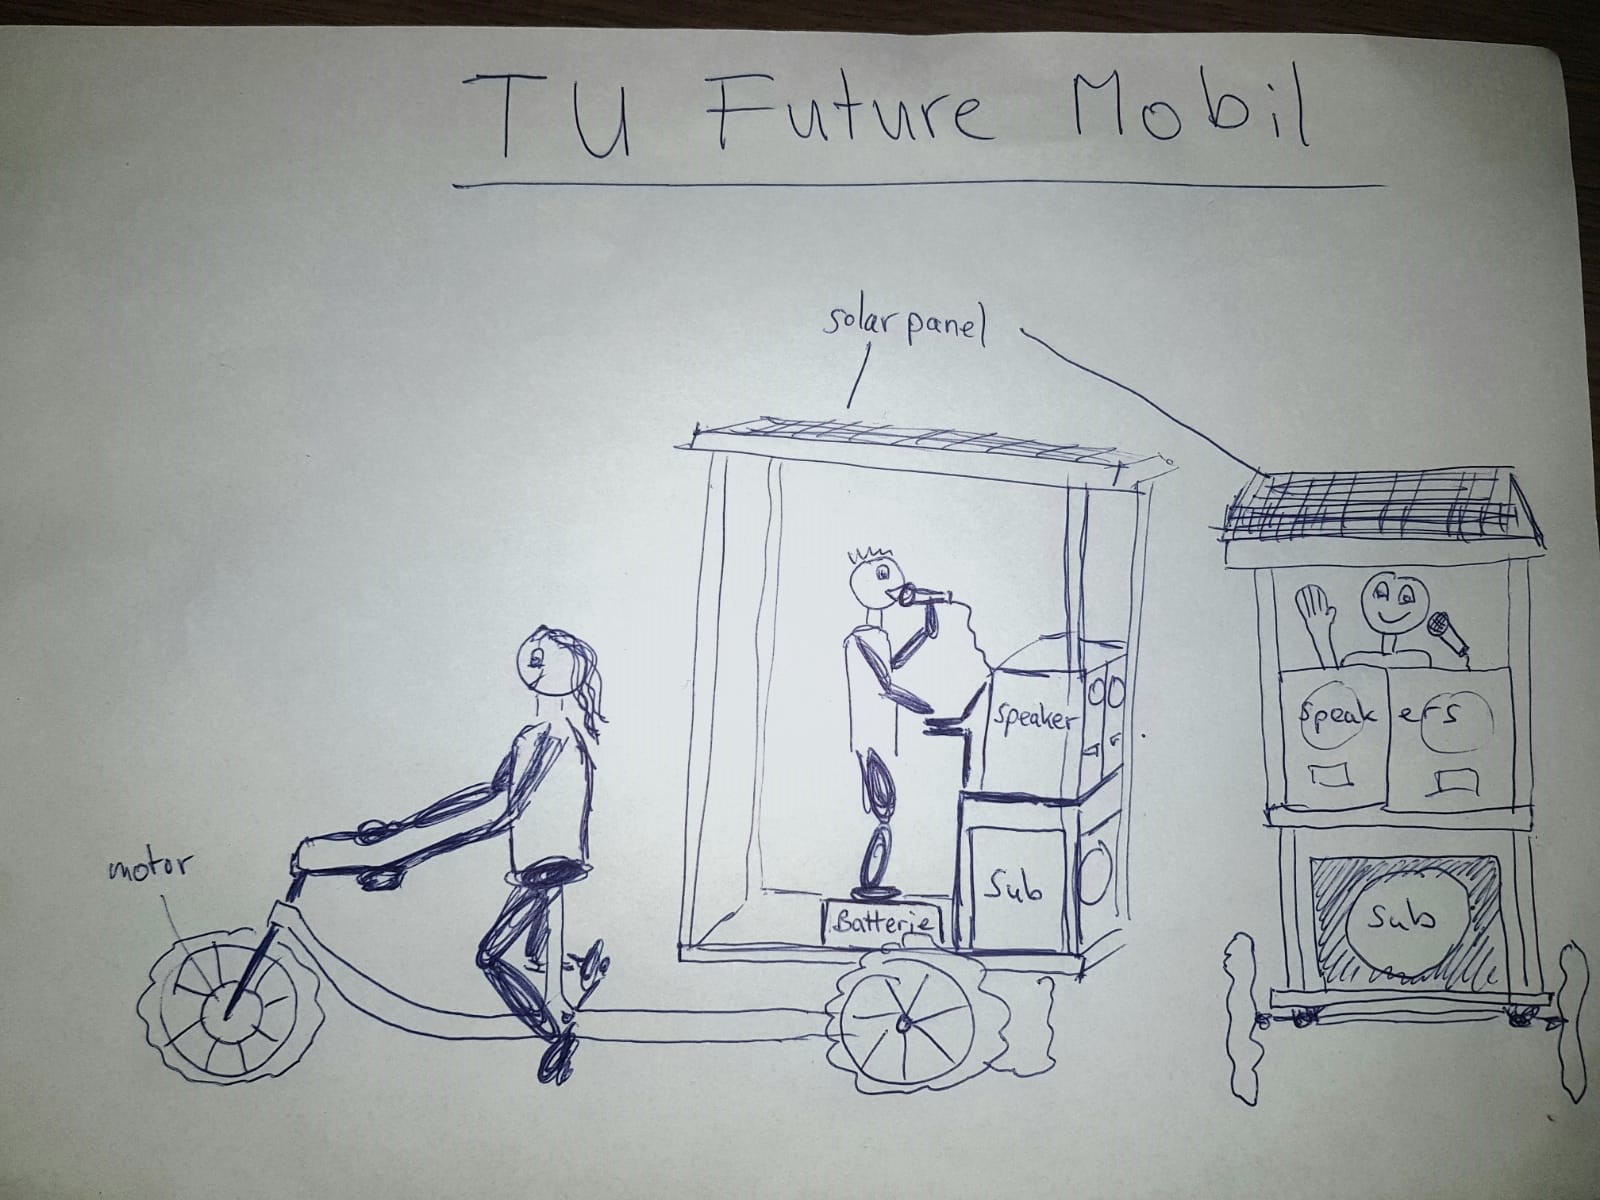 Kickoff Bau-Workshop fürs TU Future Mobil